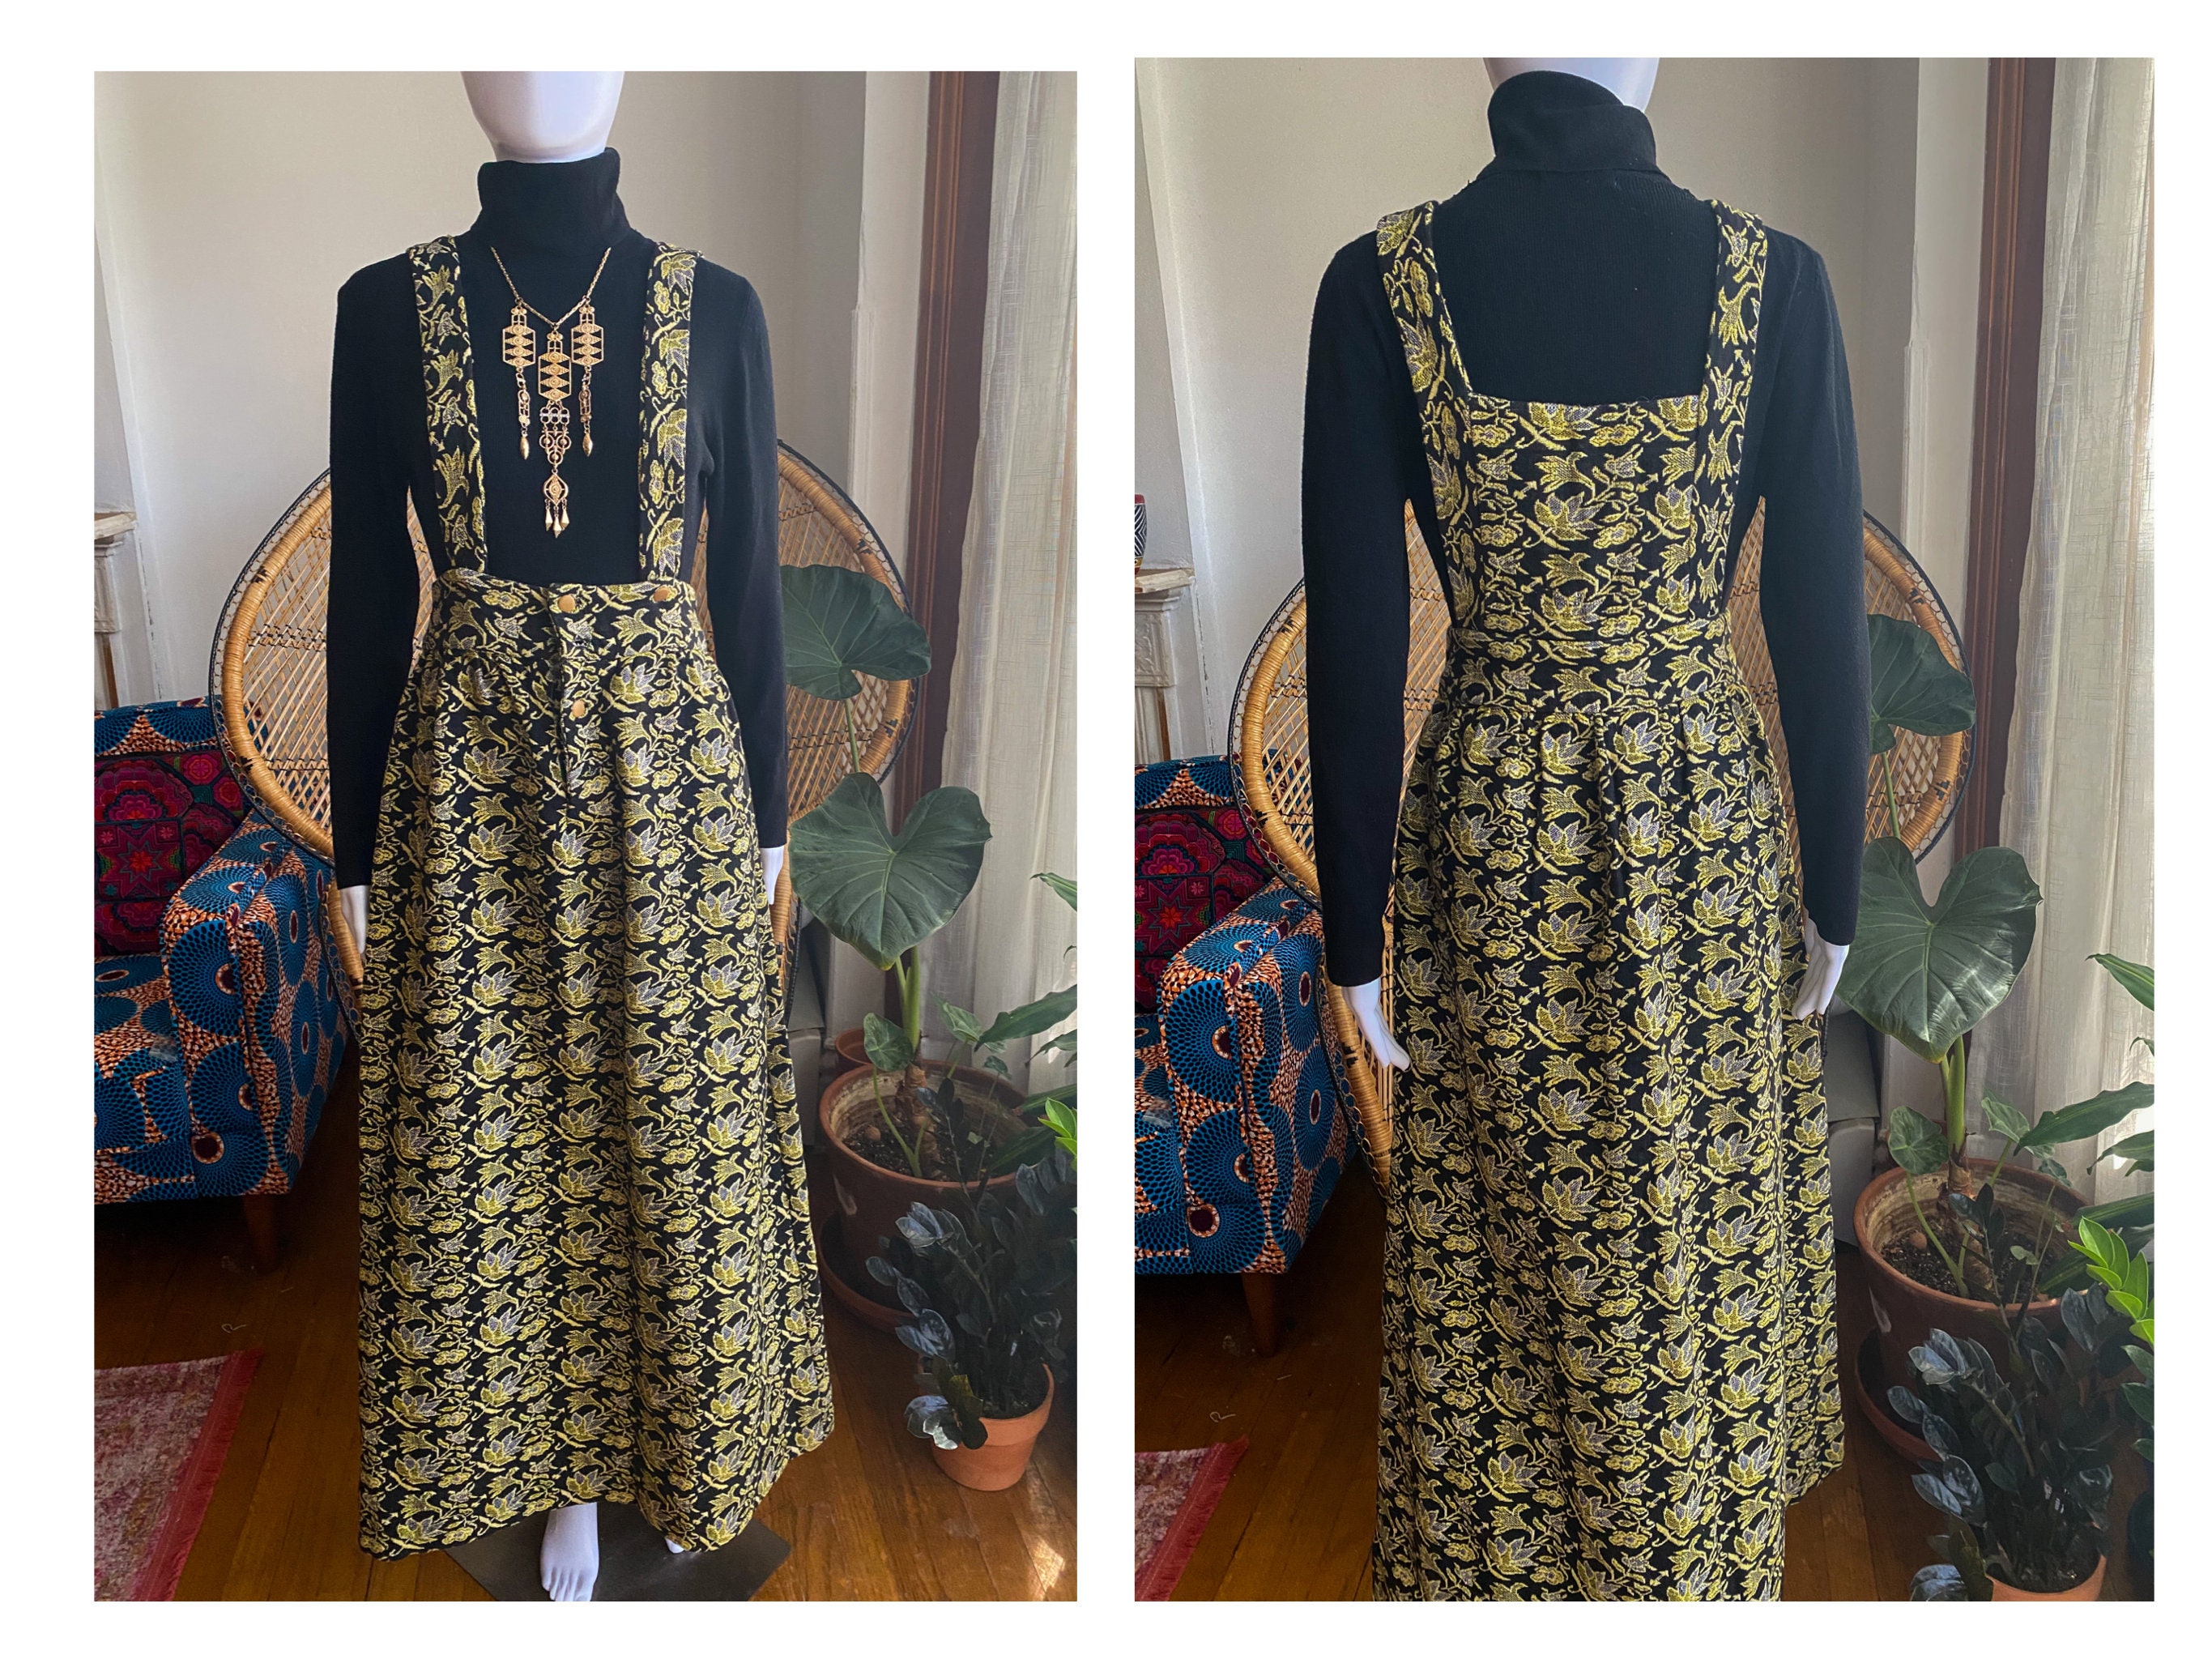 Luna Dress Sewing Pattern, dress patterns for women, women sewing patterns,  pdf sewing pattern, ladies dress patterns, fall dress